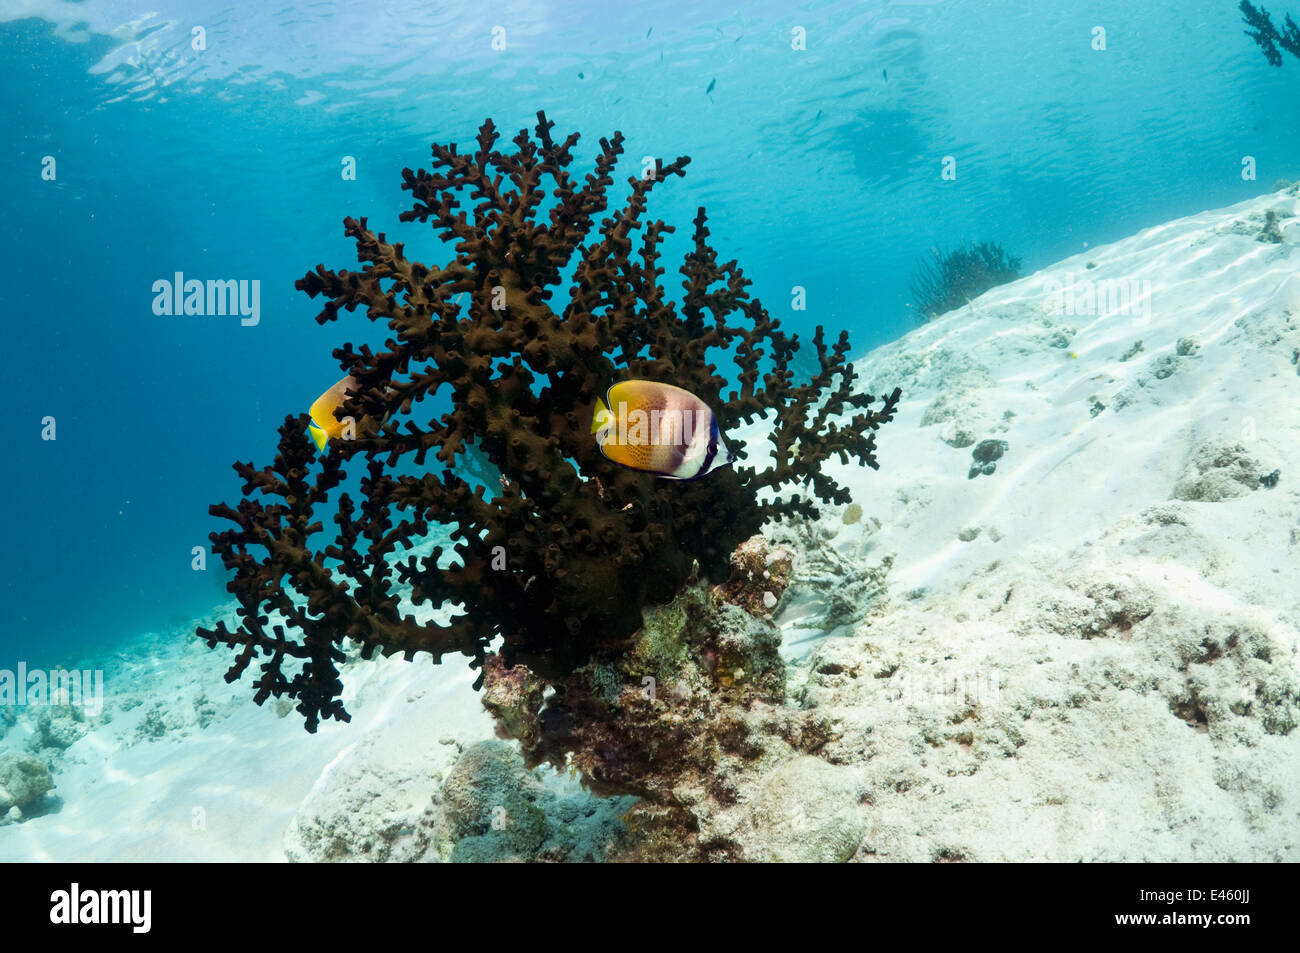 Black Tree Coral (Tubastrea micranthus), Dendrophylliidae, with Klein's Butterflyfish (Chaetodon kleinii). Indonesia, October. Stock Photo